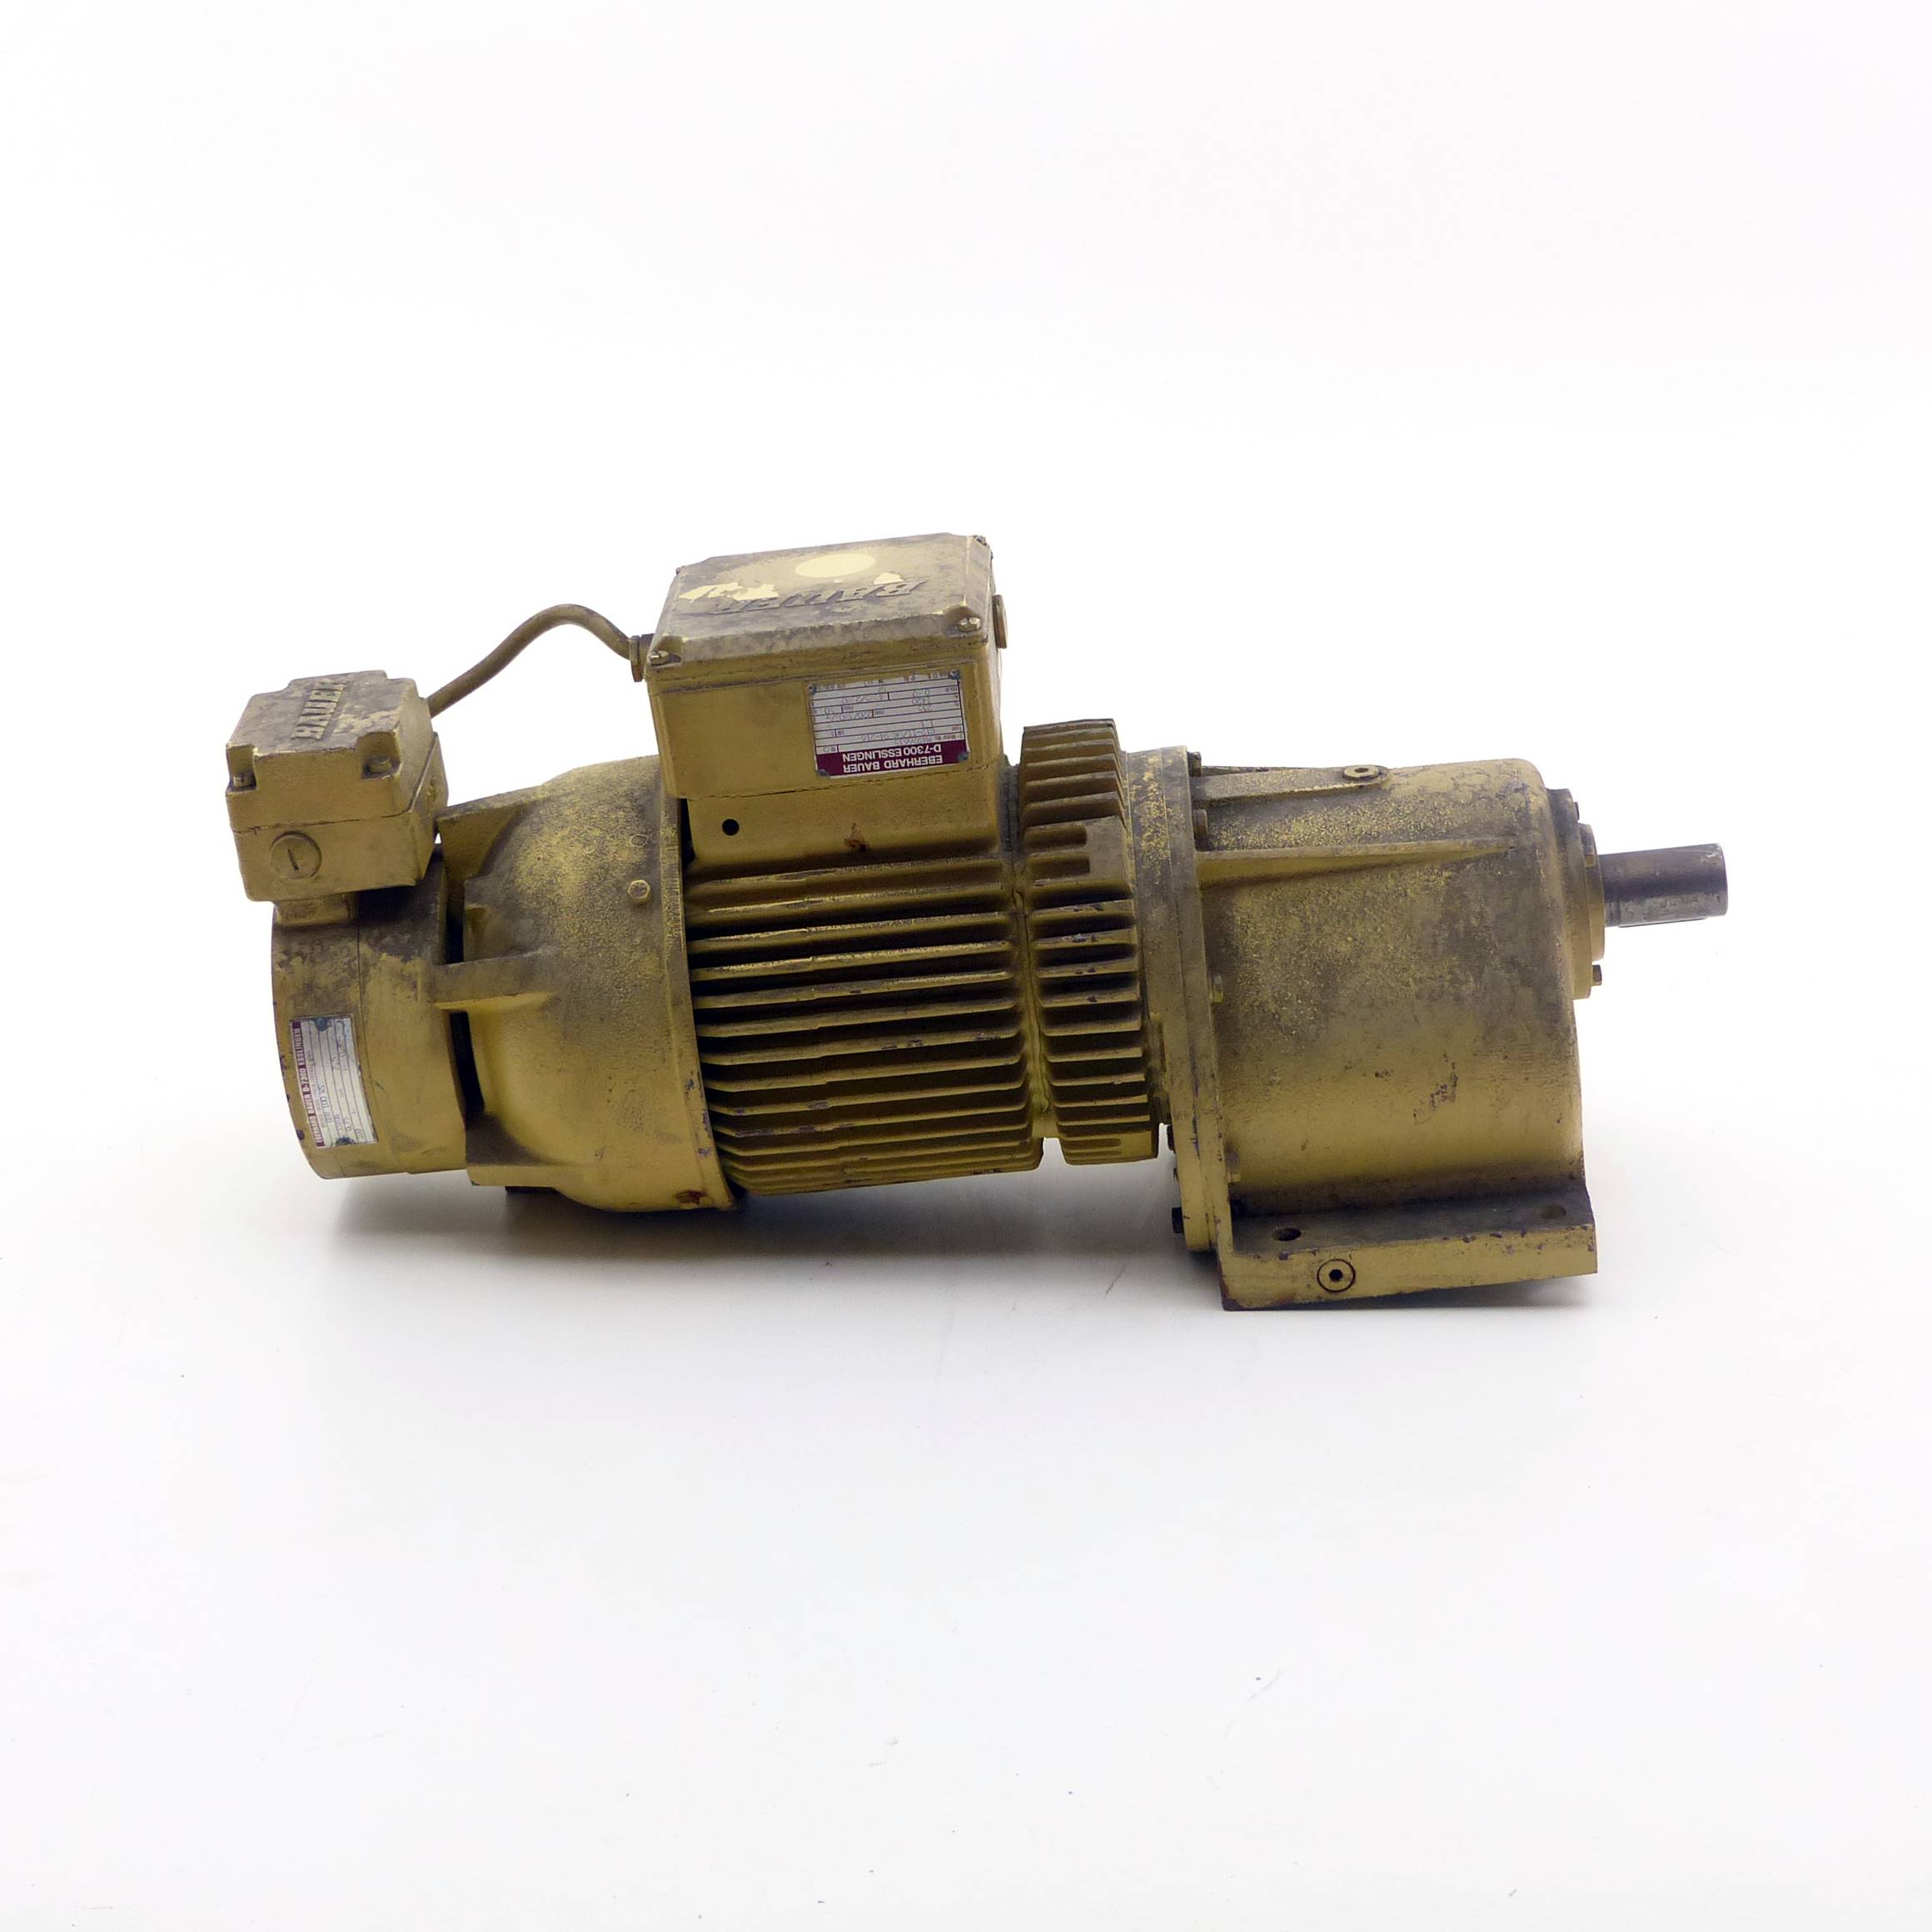 Getriebemotor G12-11/DK 94-216 